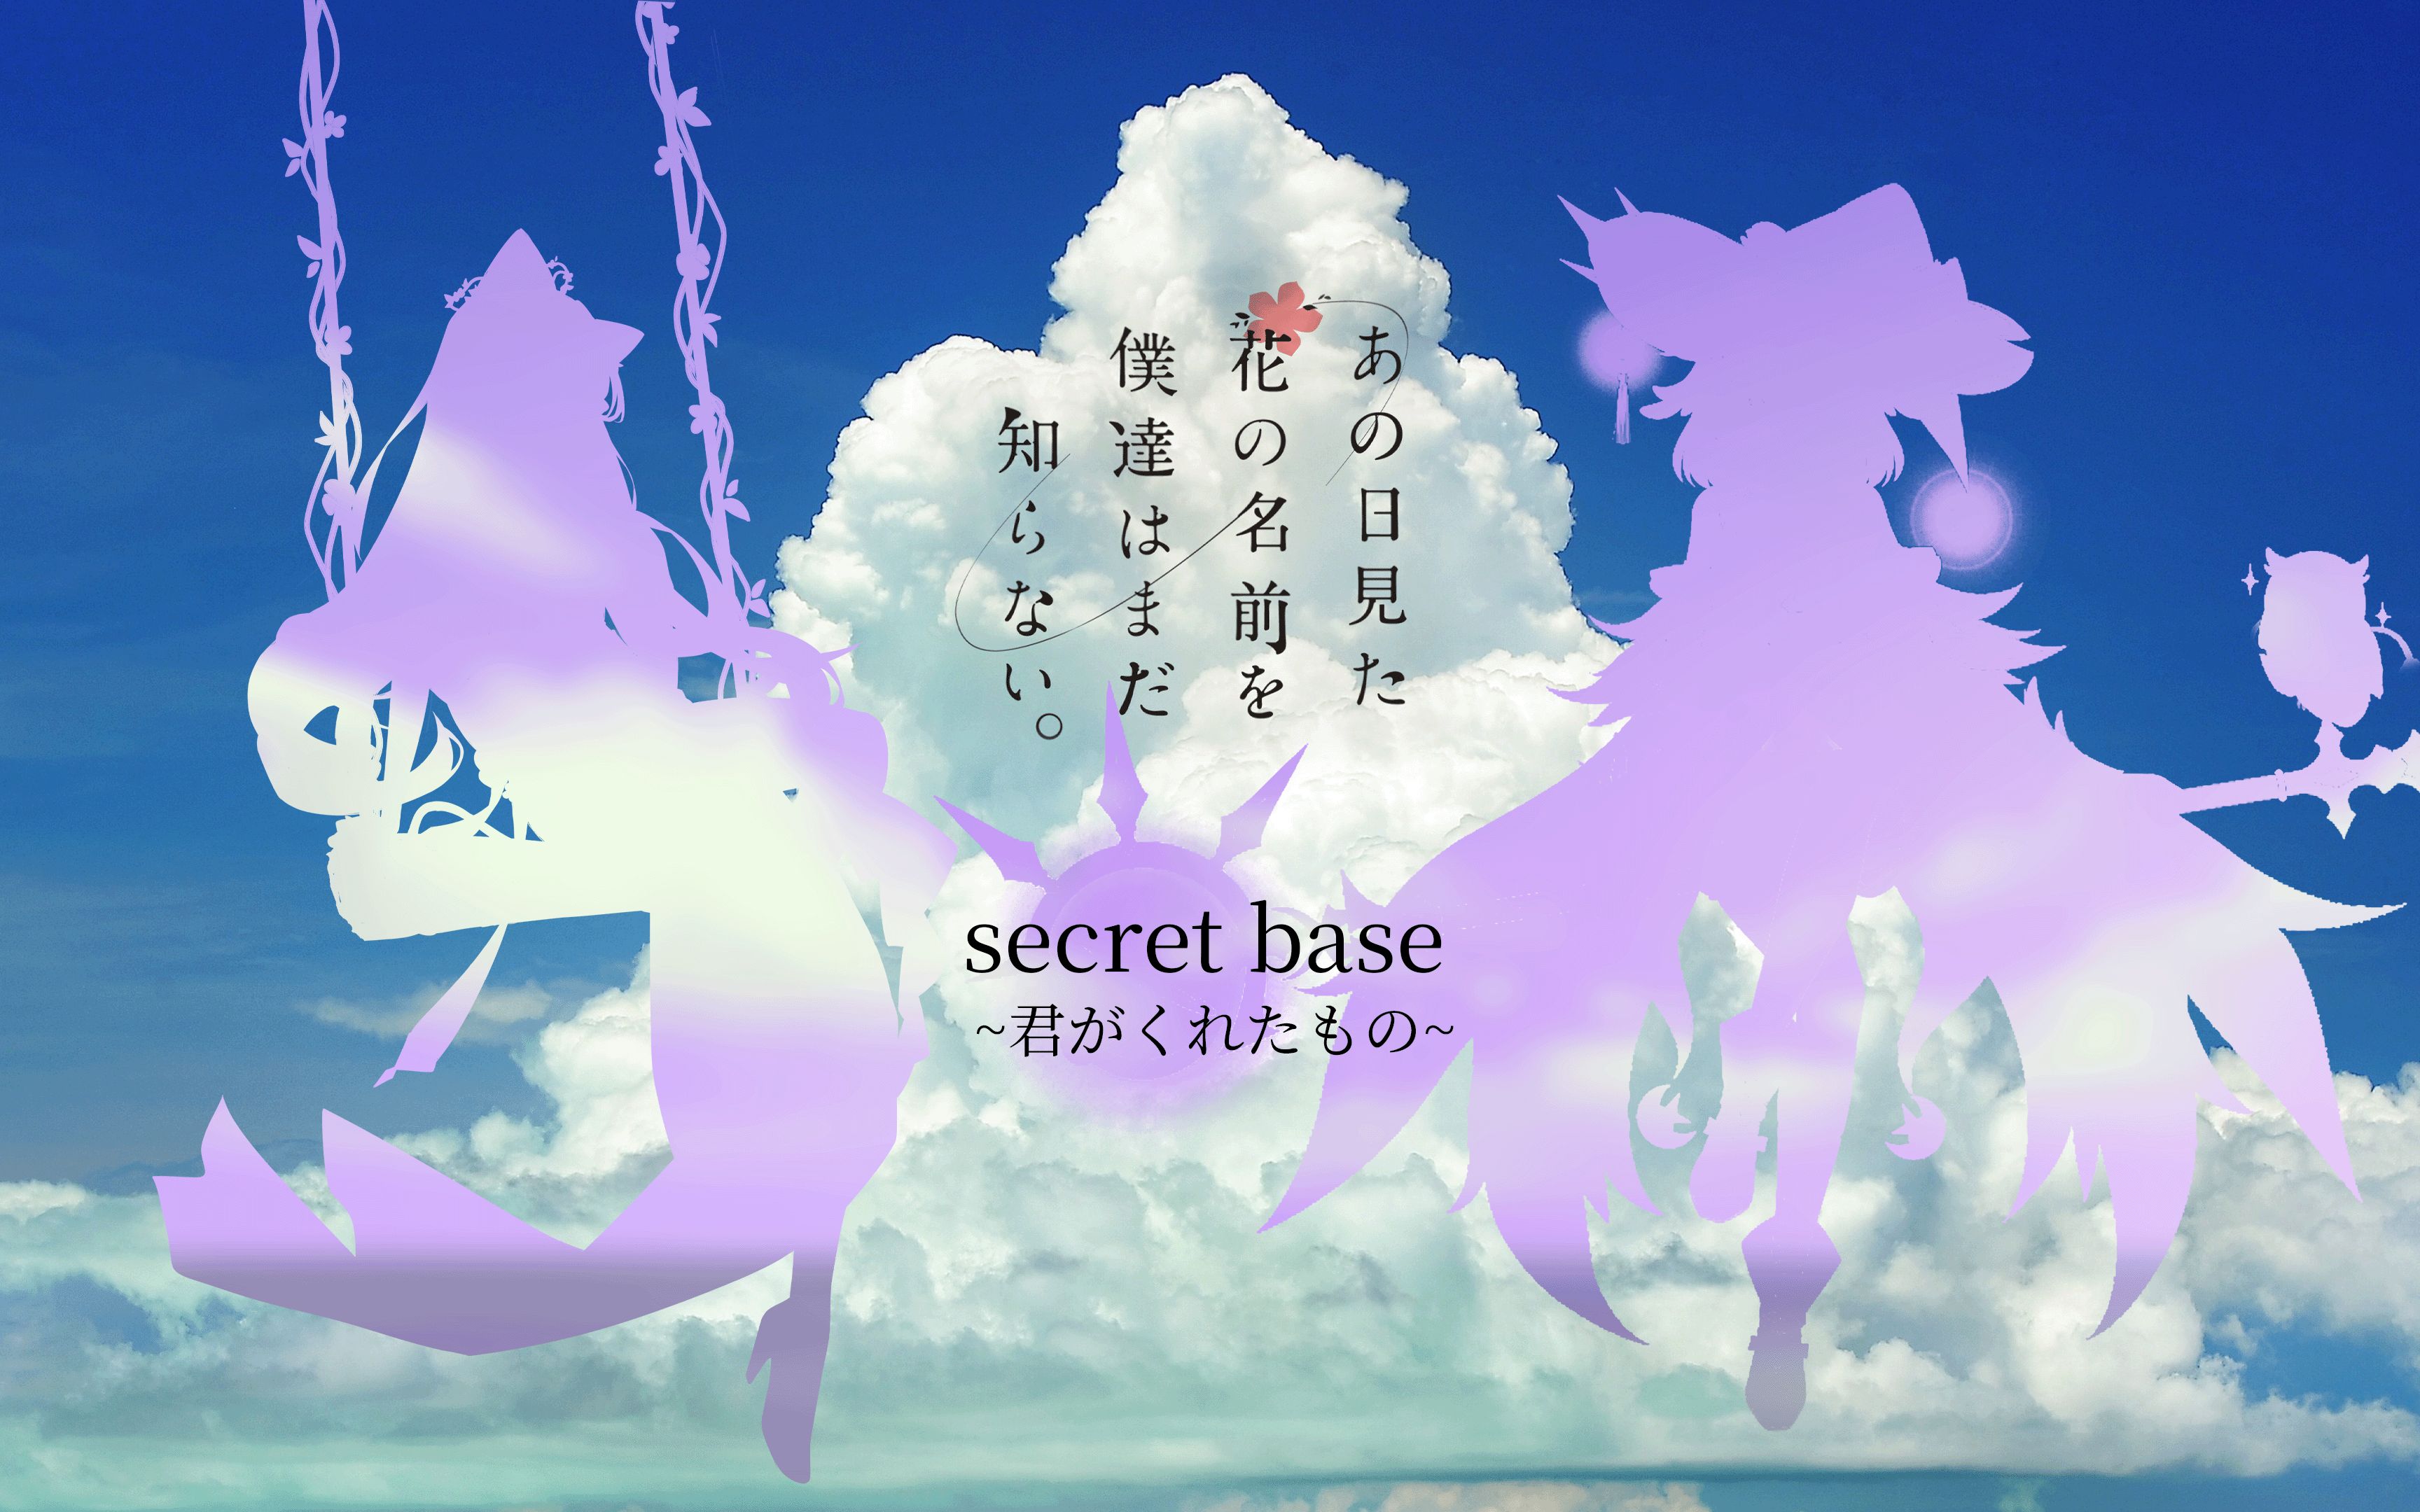 Secret base 霍鹭鹭&量子猫.jpg